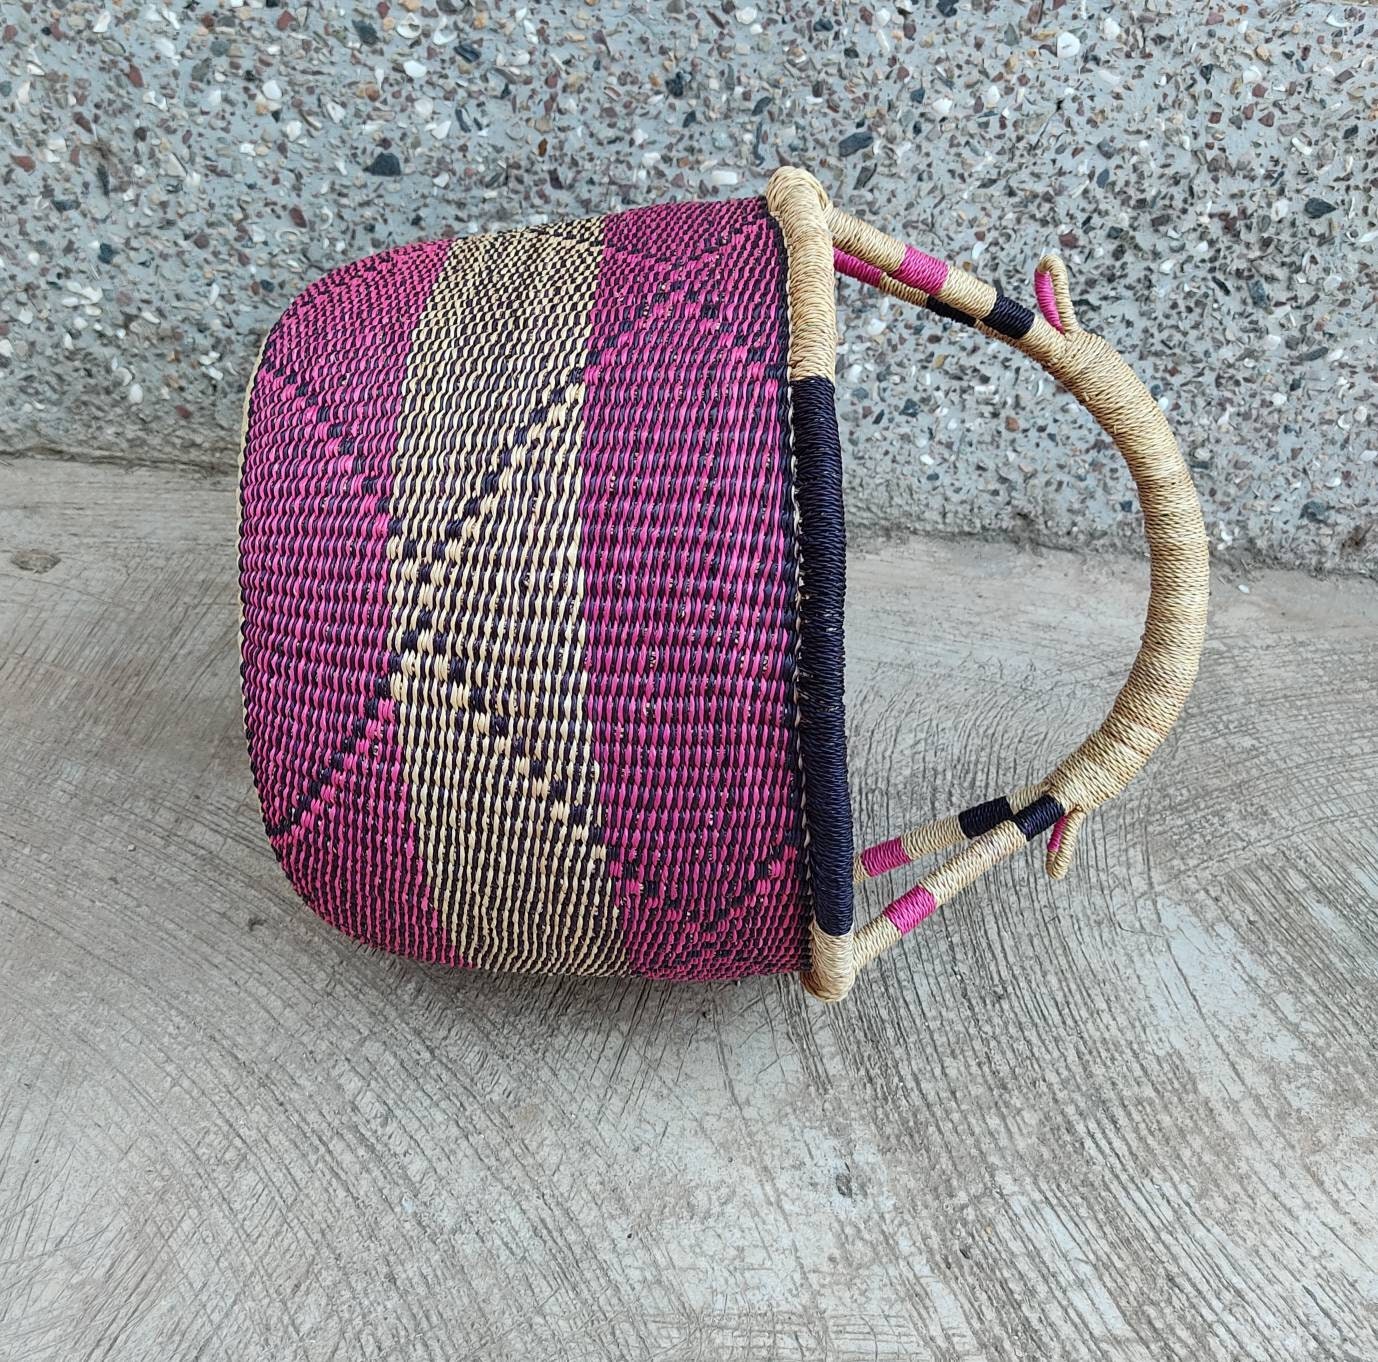 Storage basket |African basket| Straw bag | Woven basket | Gift basket | African market basket| handmade basket|Market Basket| Bolga Basket